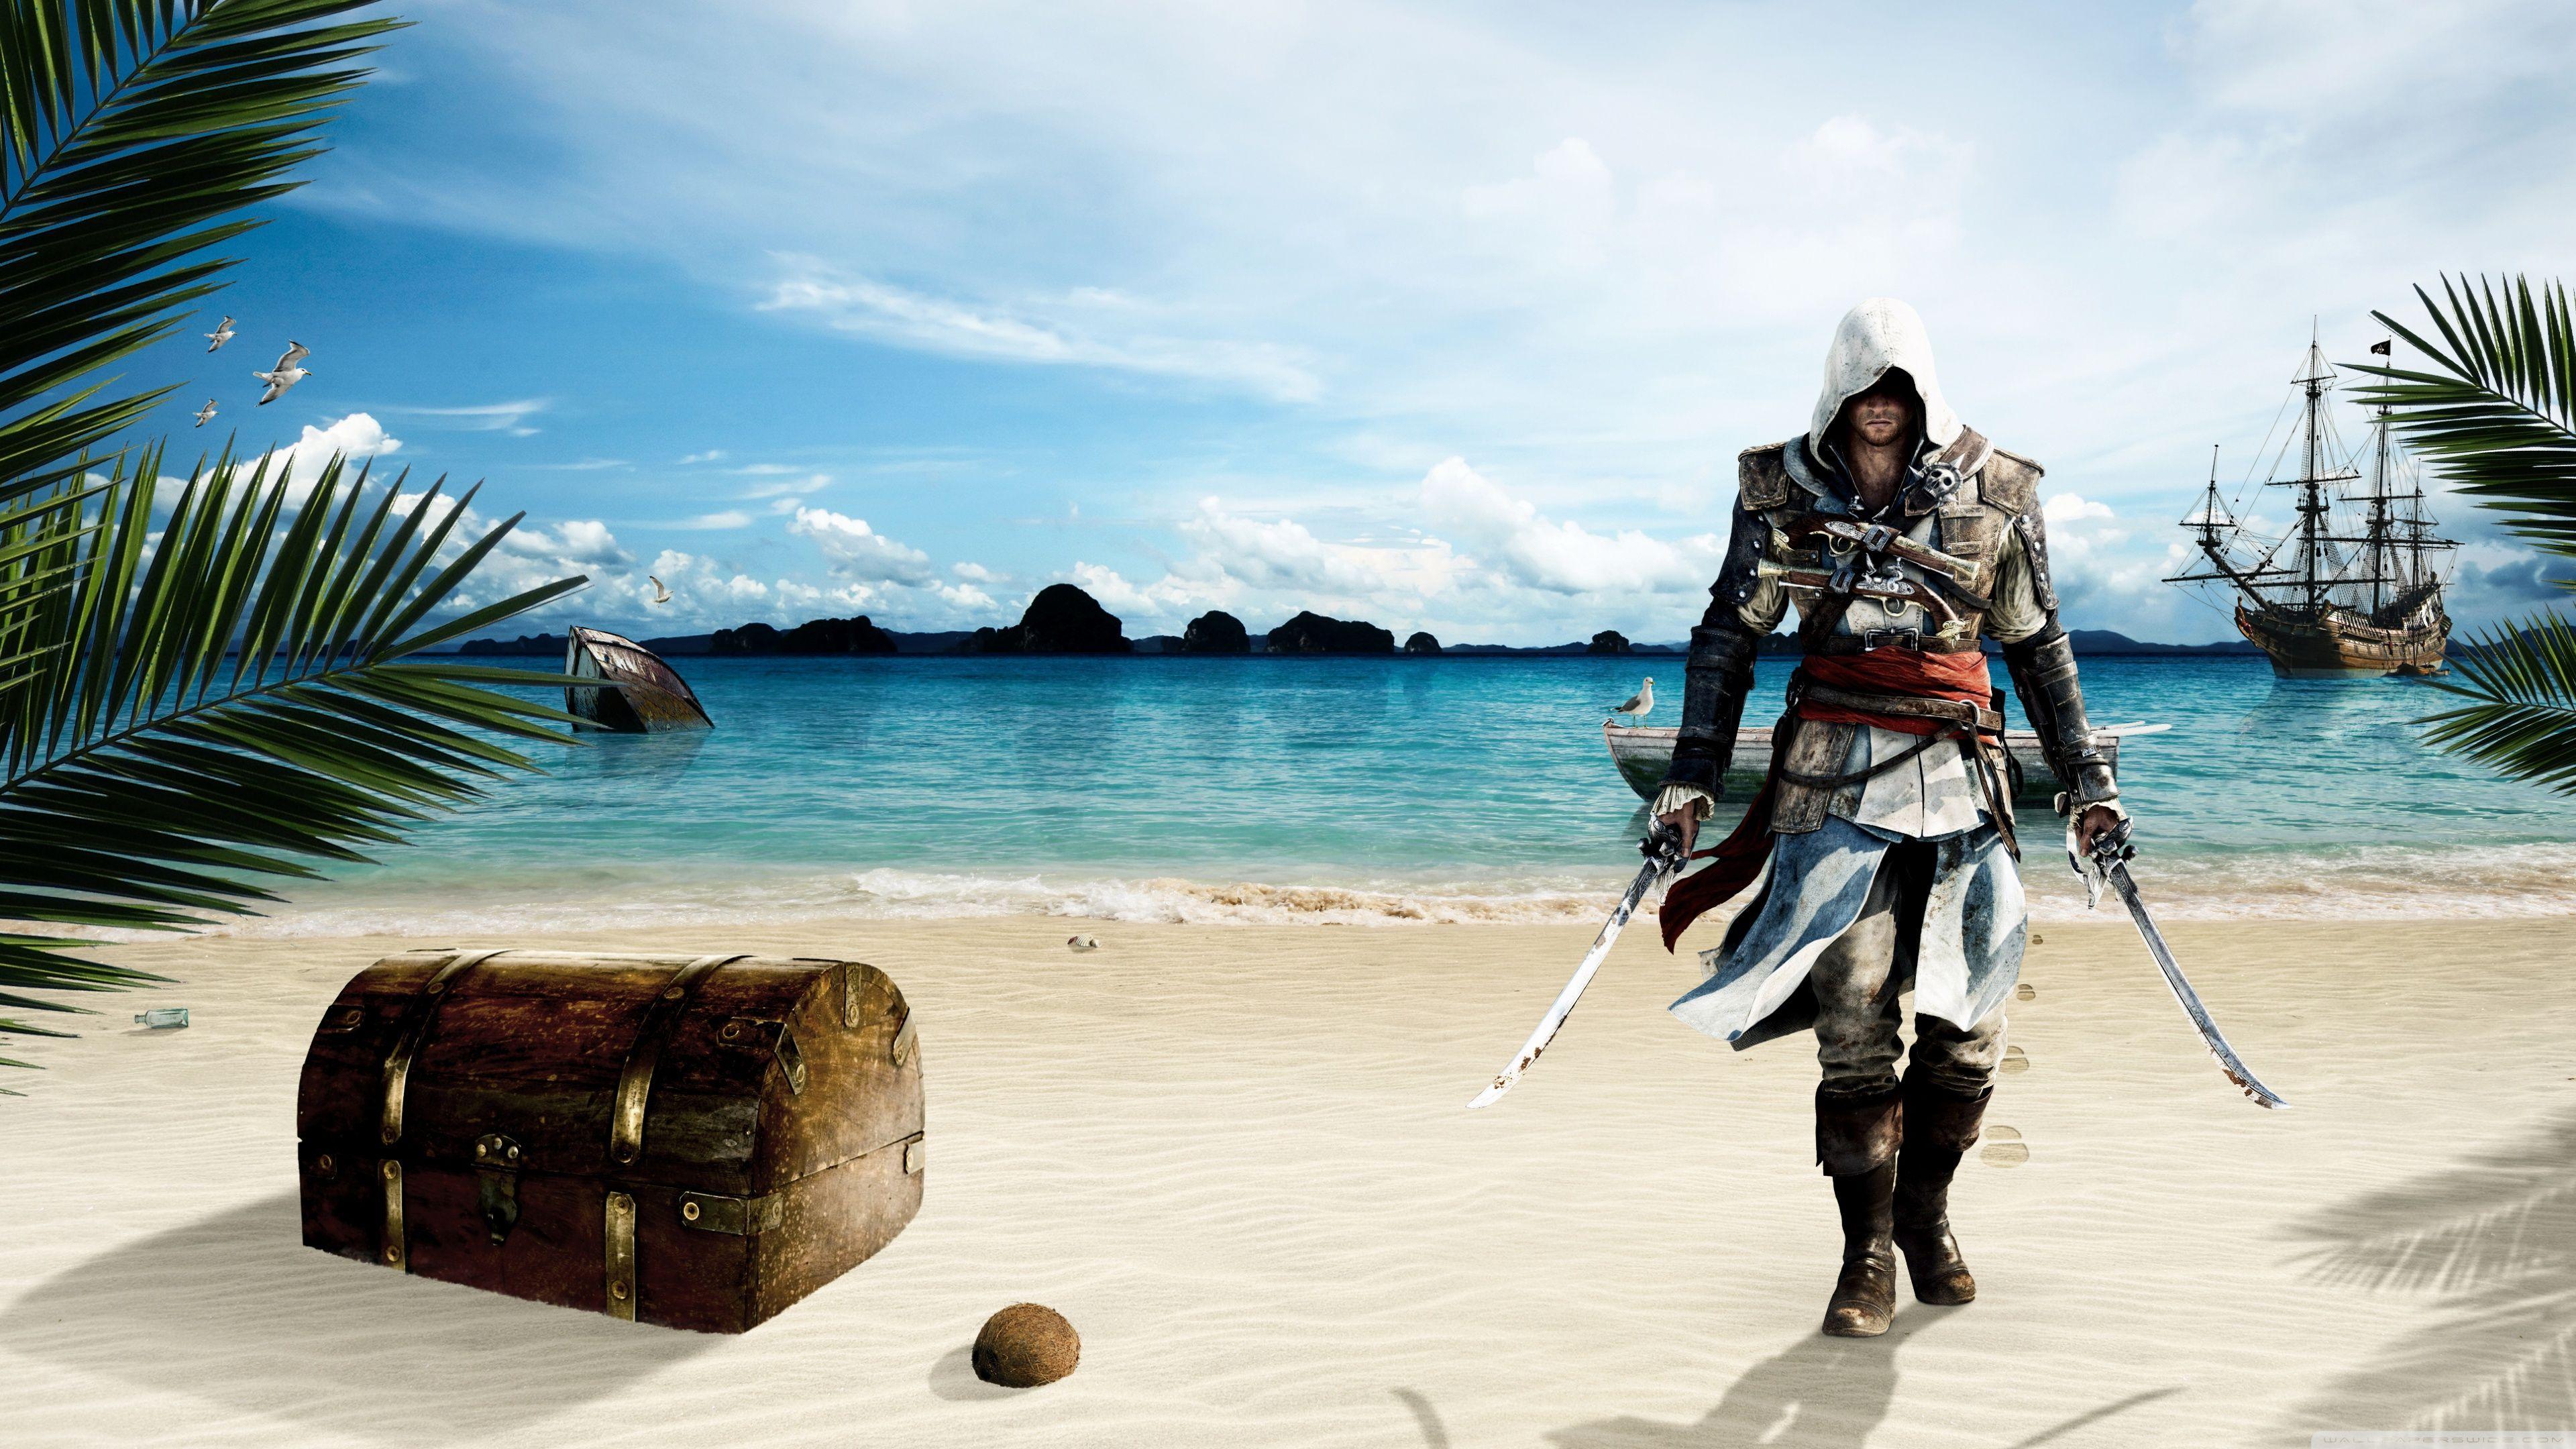 Assassin's Creed IV Black Flag HD desktop wallpapers : Widescreen